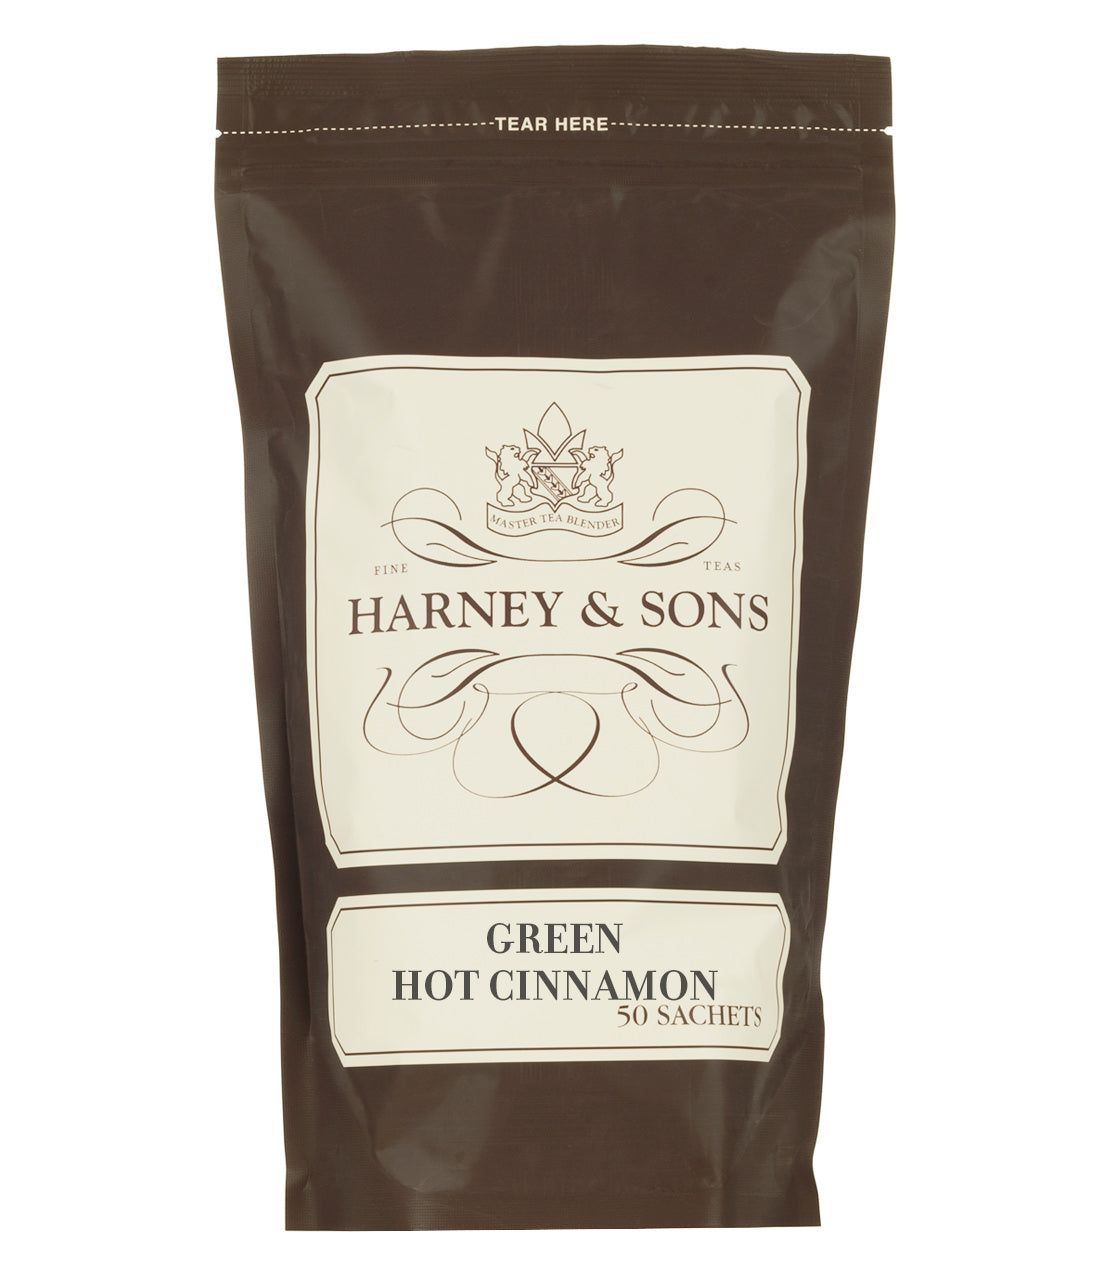 Green Hot Cinnamon Spice, Bag of 50 Sachets - Sachets Bag of 50 Sachets - Harney & Sons Fine Teas